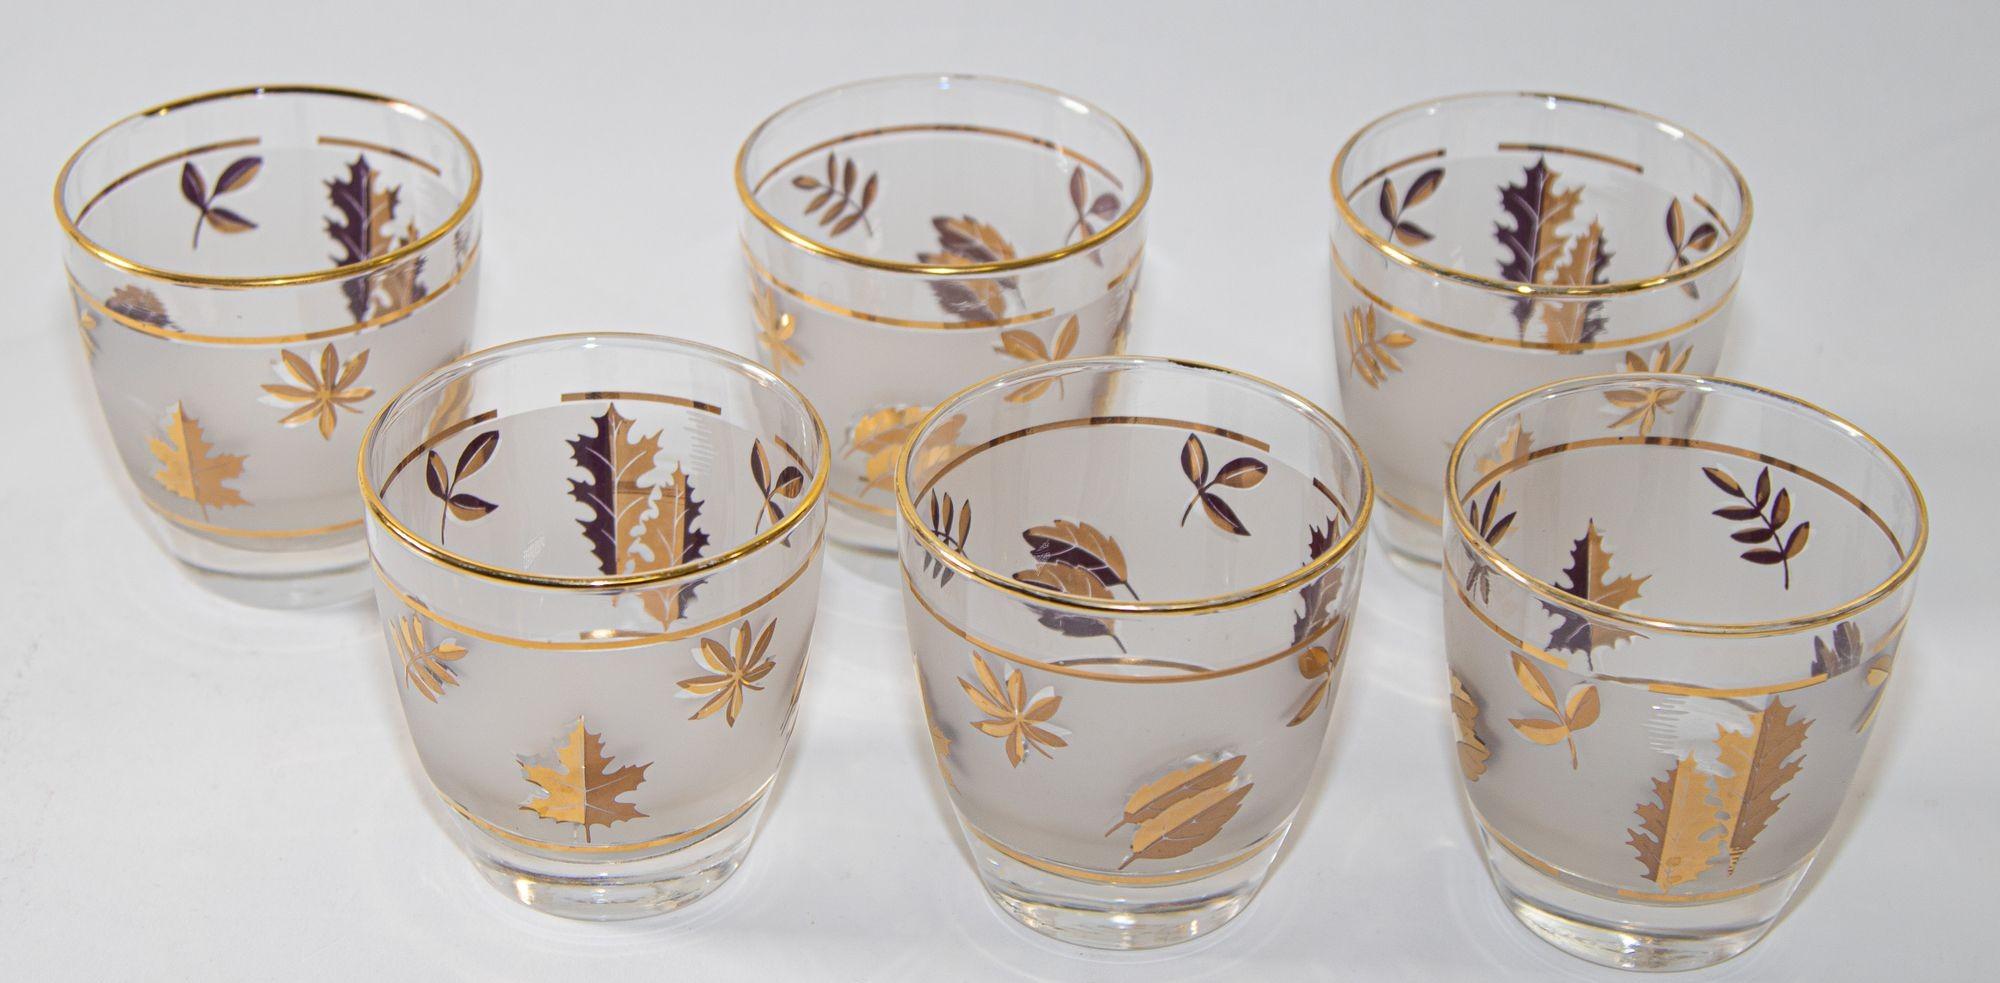 Vintage Libbey Frosted & Golden Foliage Cocktail Glasses, Set of 6 For Sale 2